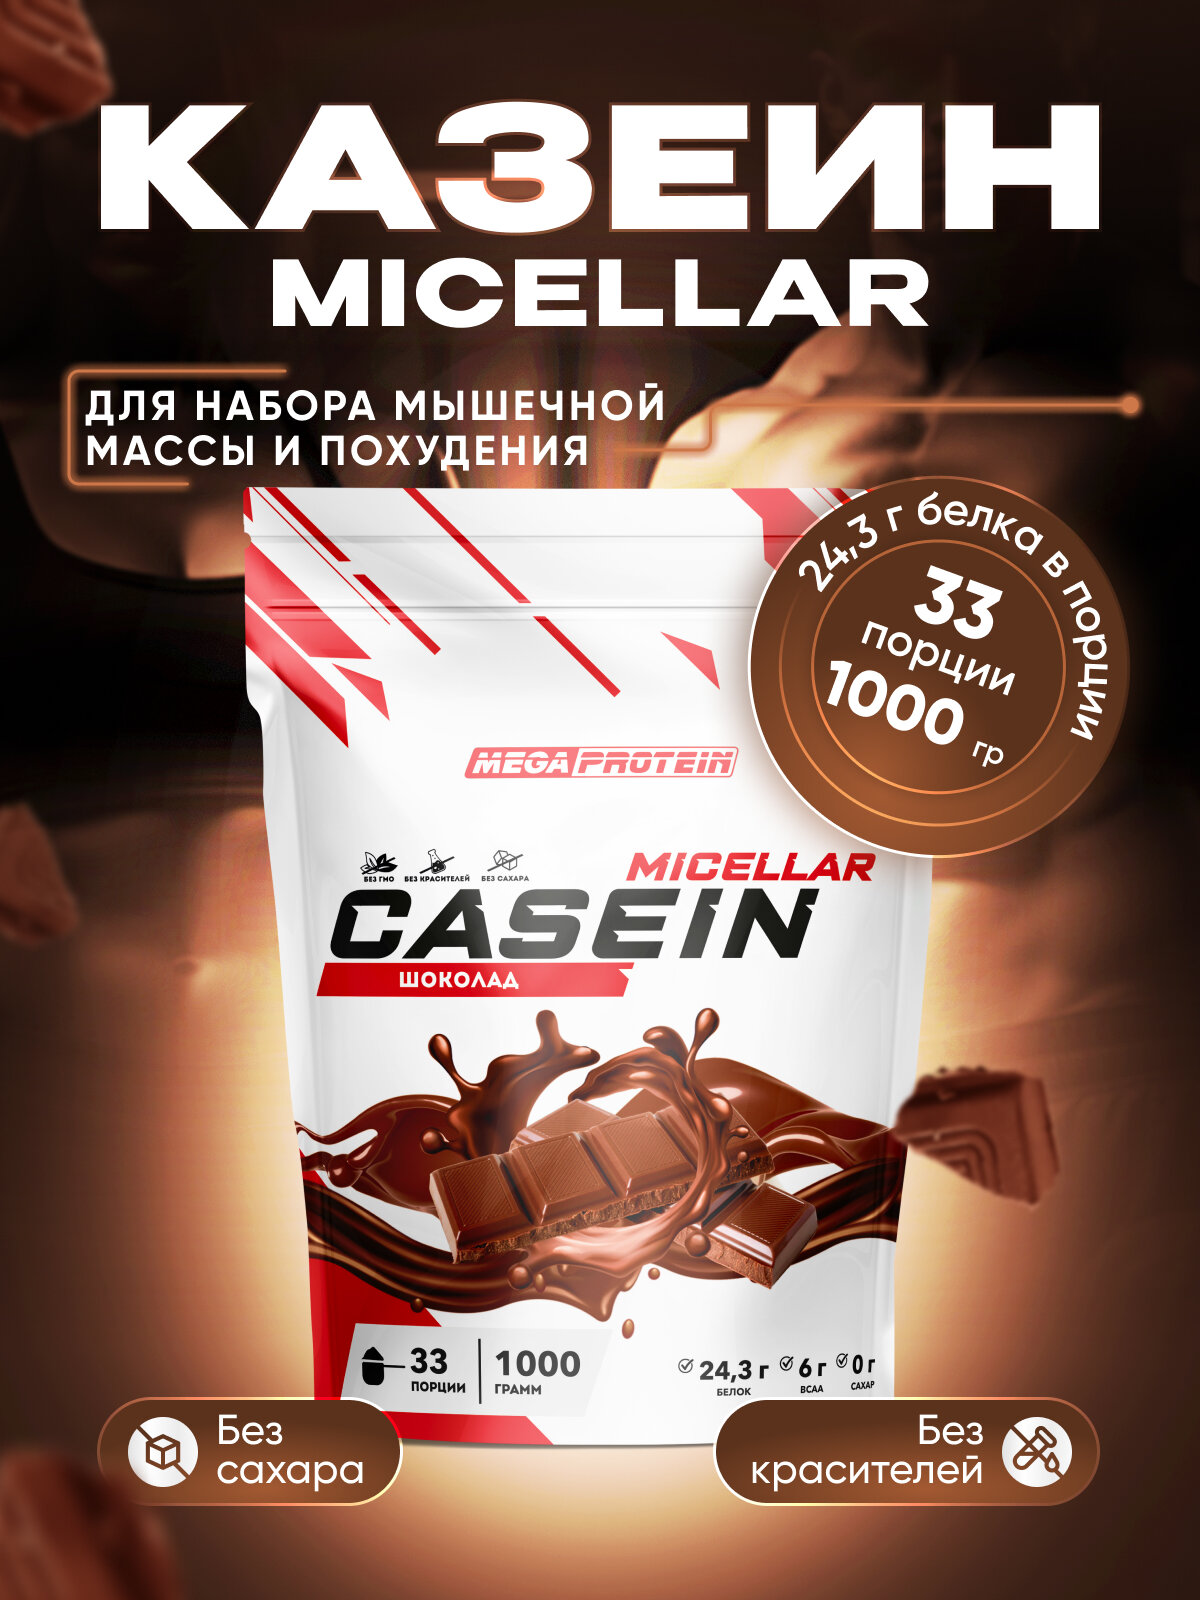 Мицеллярный казеин "Casein micellar" со вкусом "Шоколад" 1000 гр